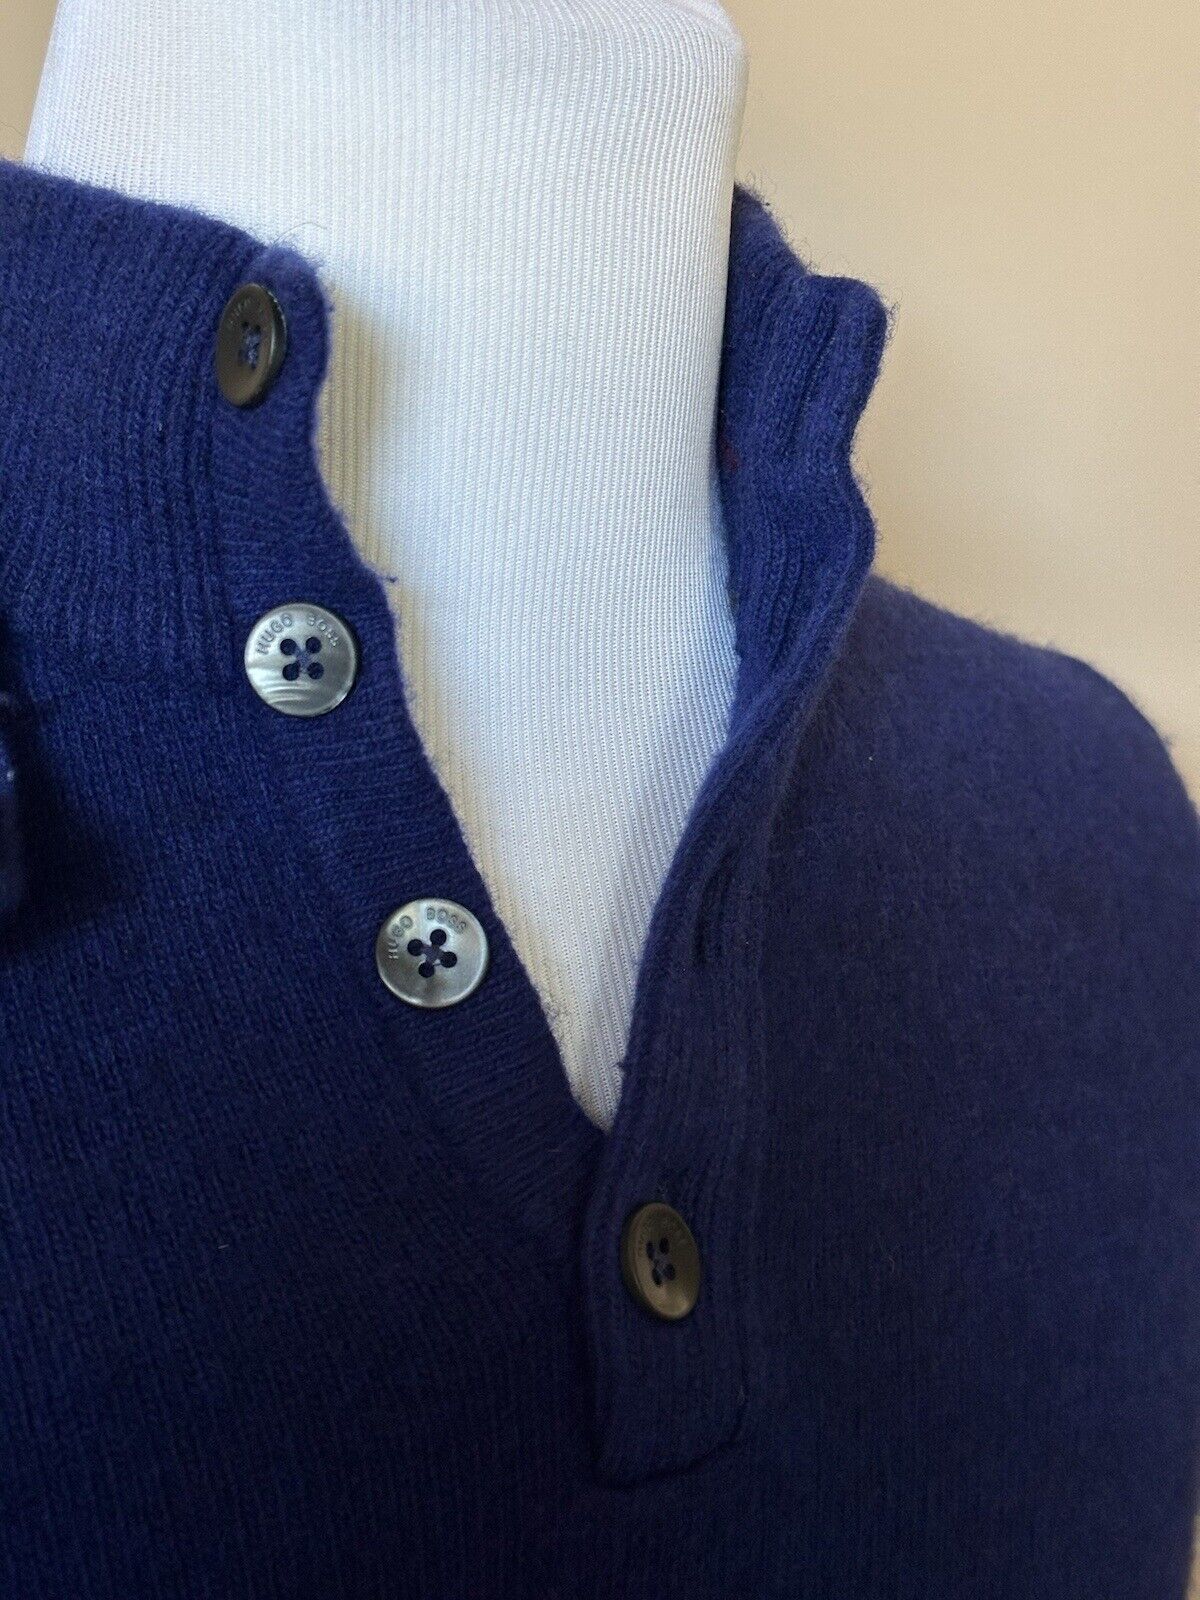 Boss Hugo Boss Long Sleeve Wool Blue Sweater L